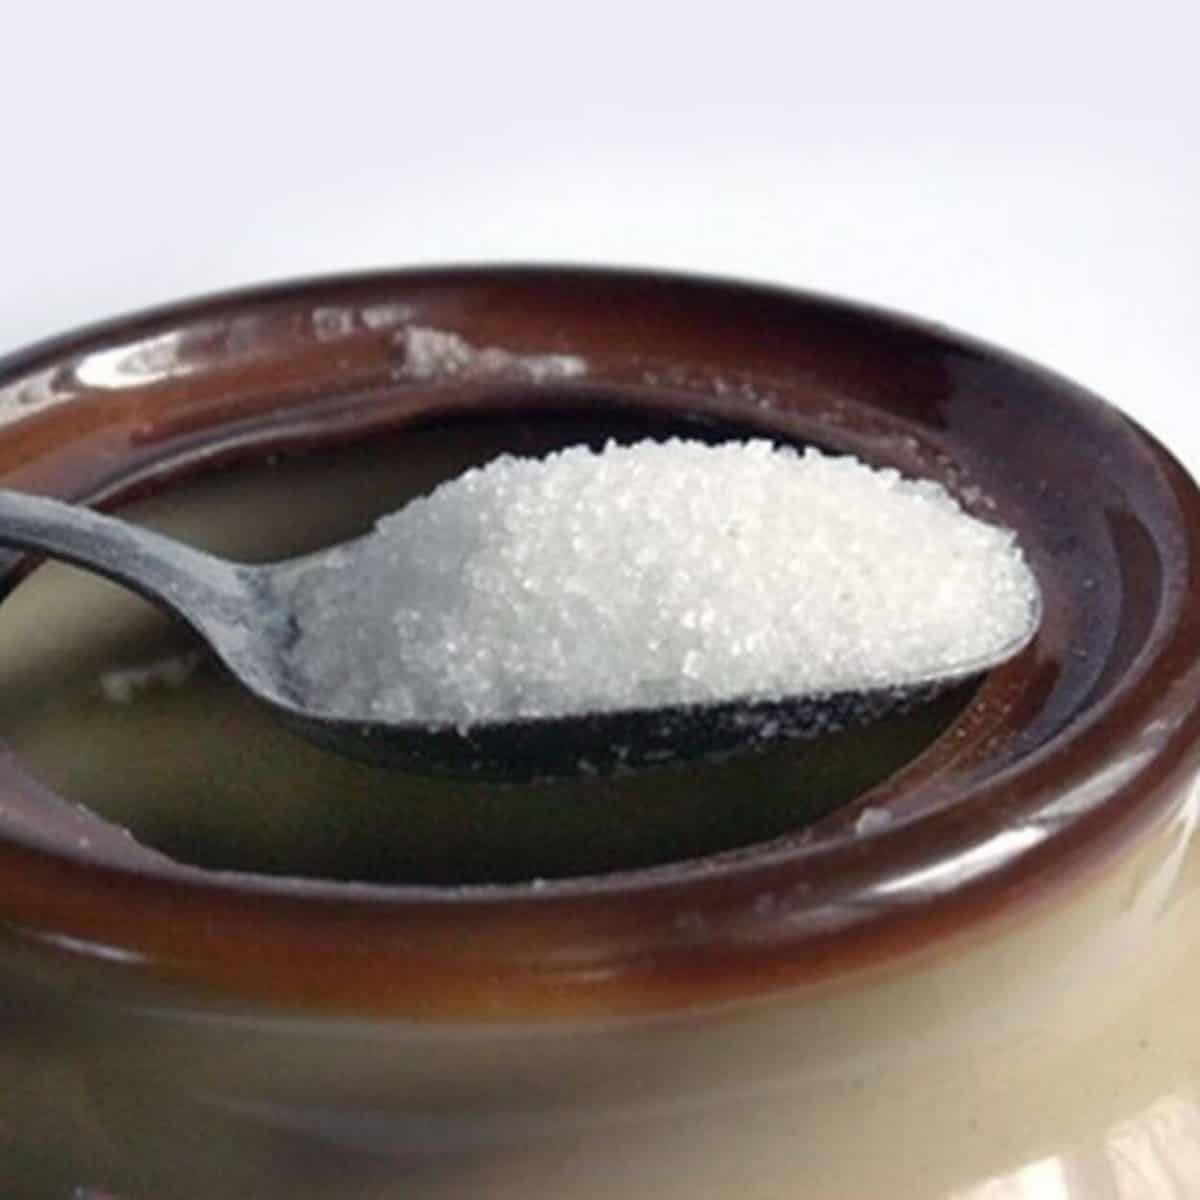 granulated sugar on a spoon